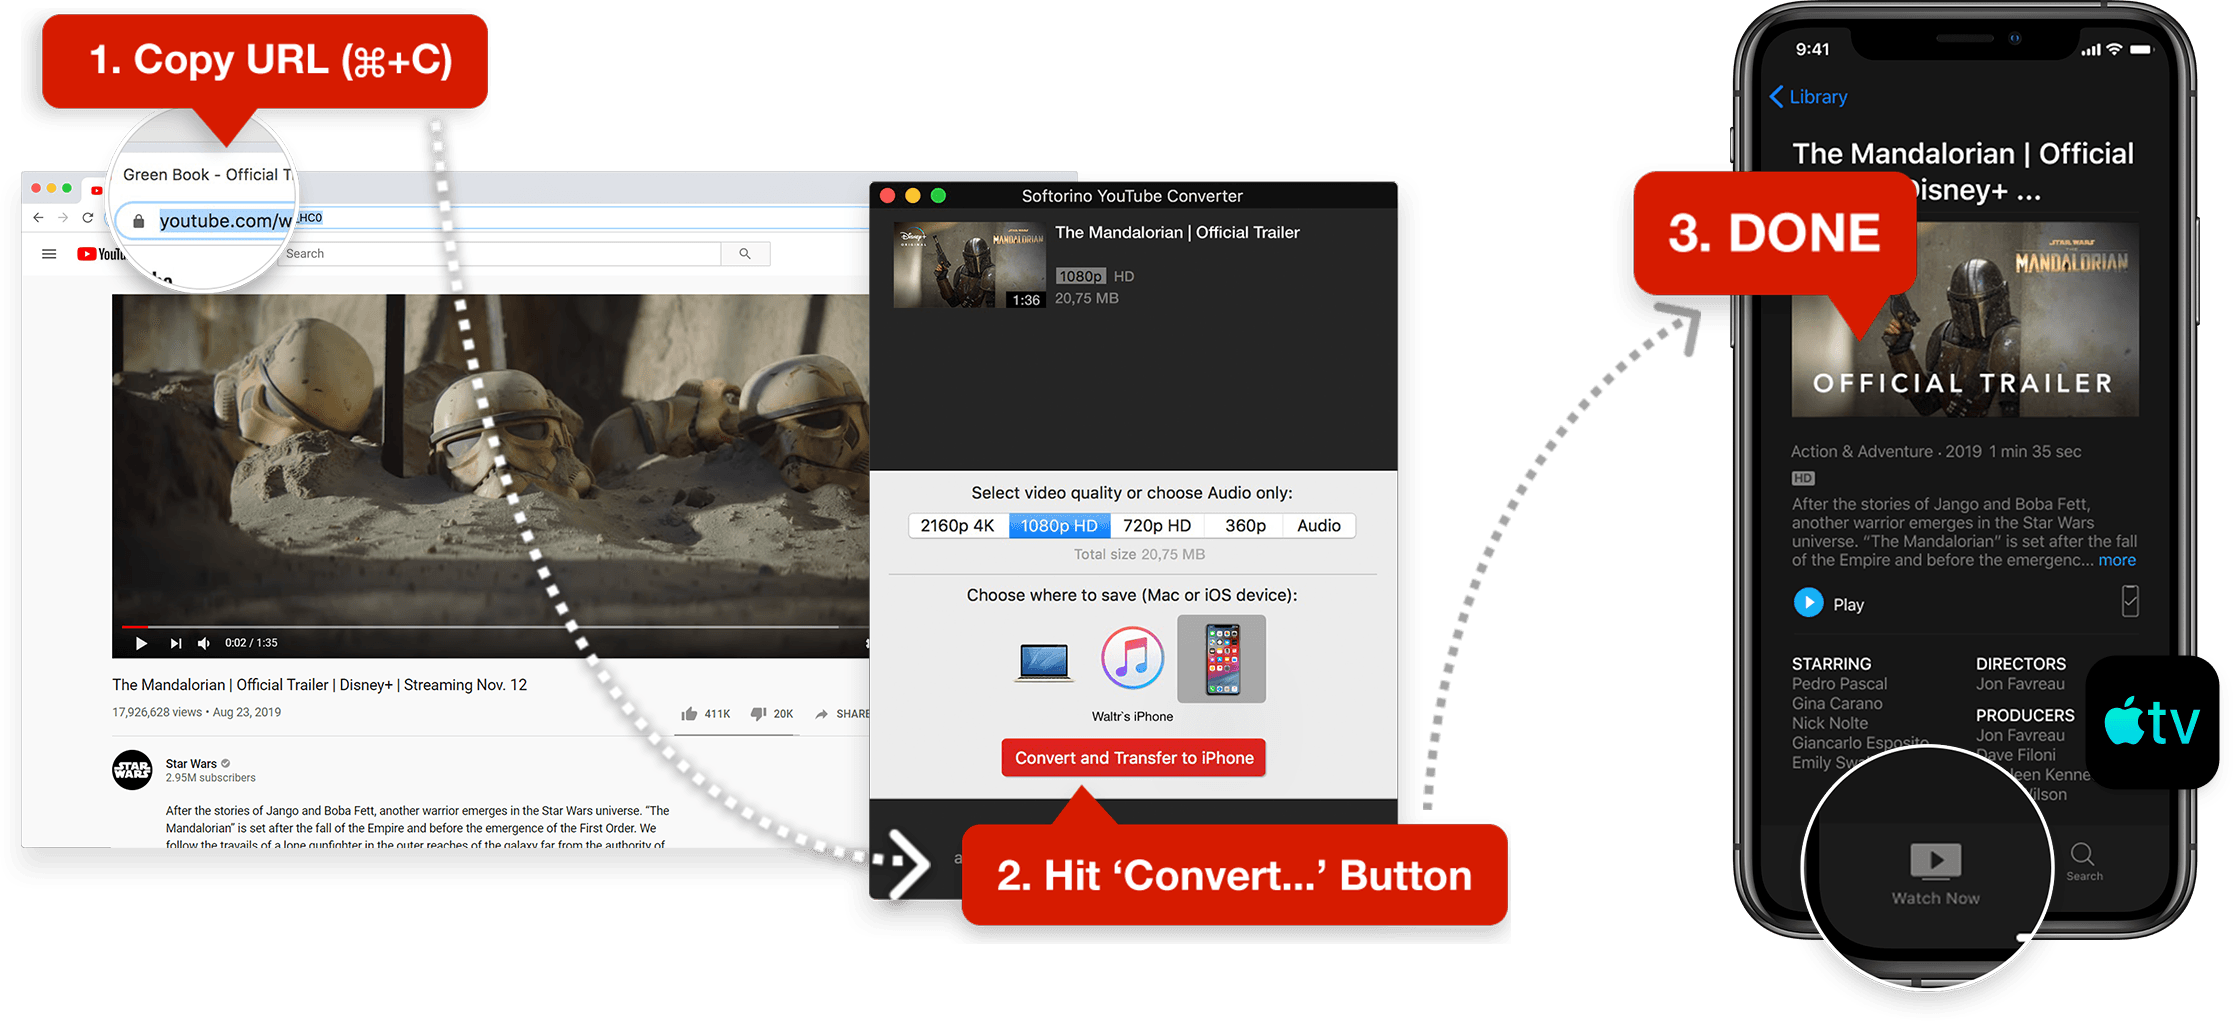 softorino youtube converter 2 windows activation key